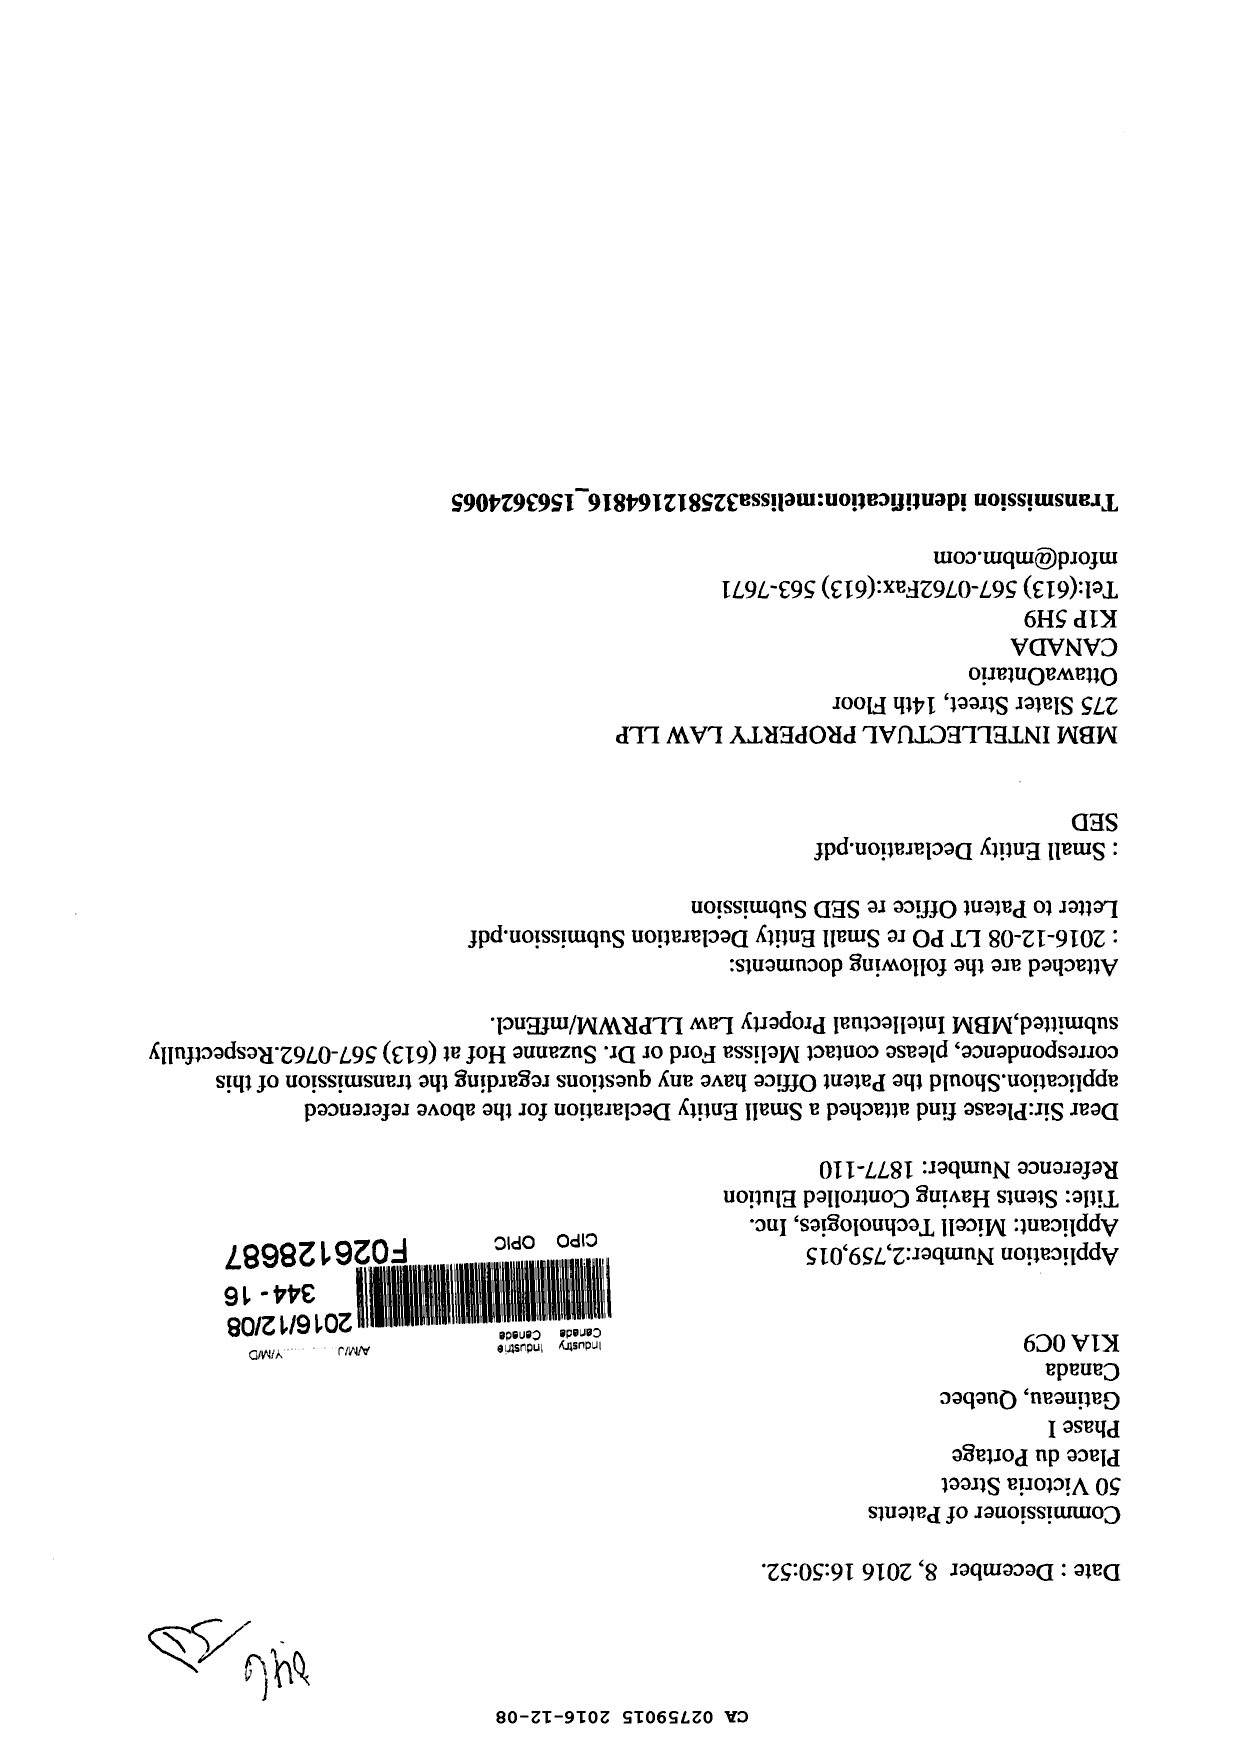 Canadian Patent Document 2759015. Correspondence 20151208. Image 1 of 3